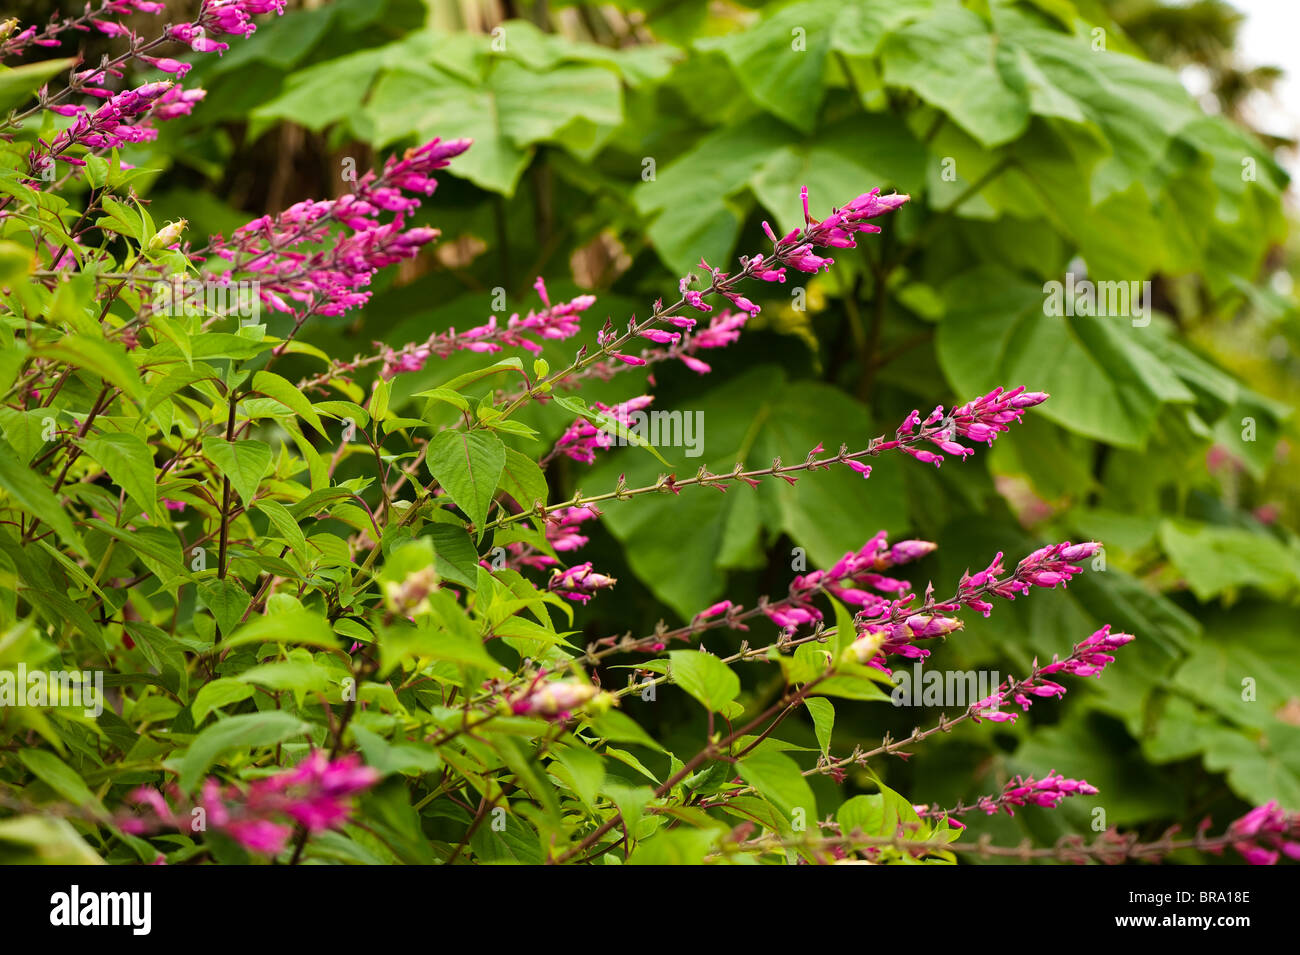 Salvia involucrata, Roseleaf sage, in flower Stock Photo